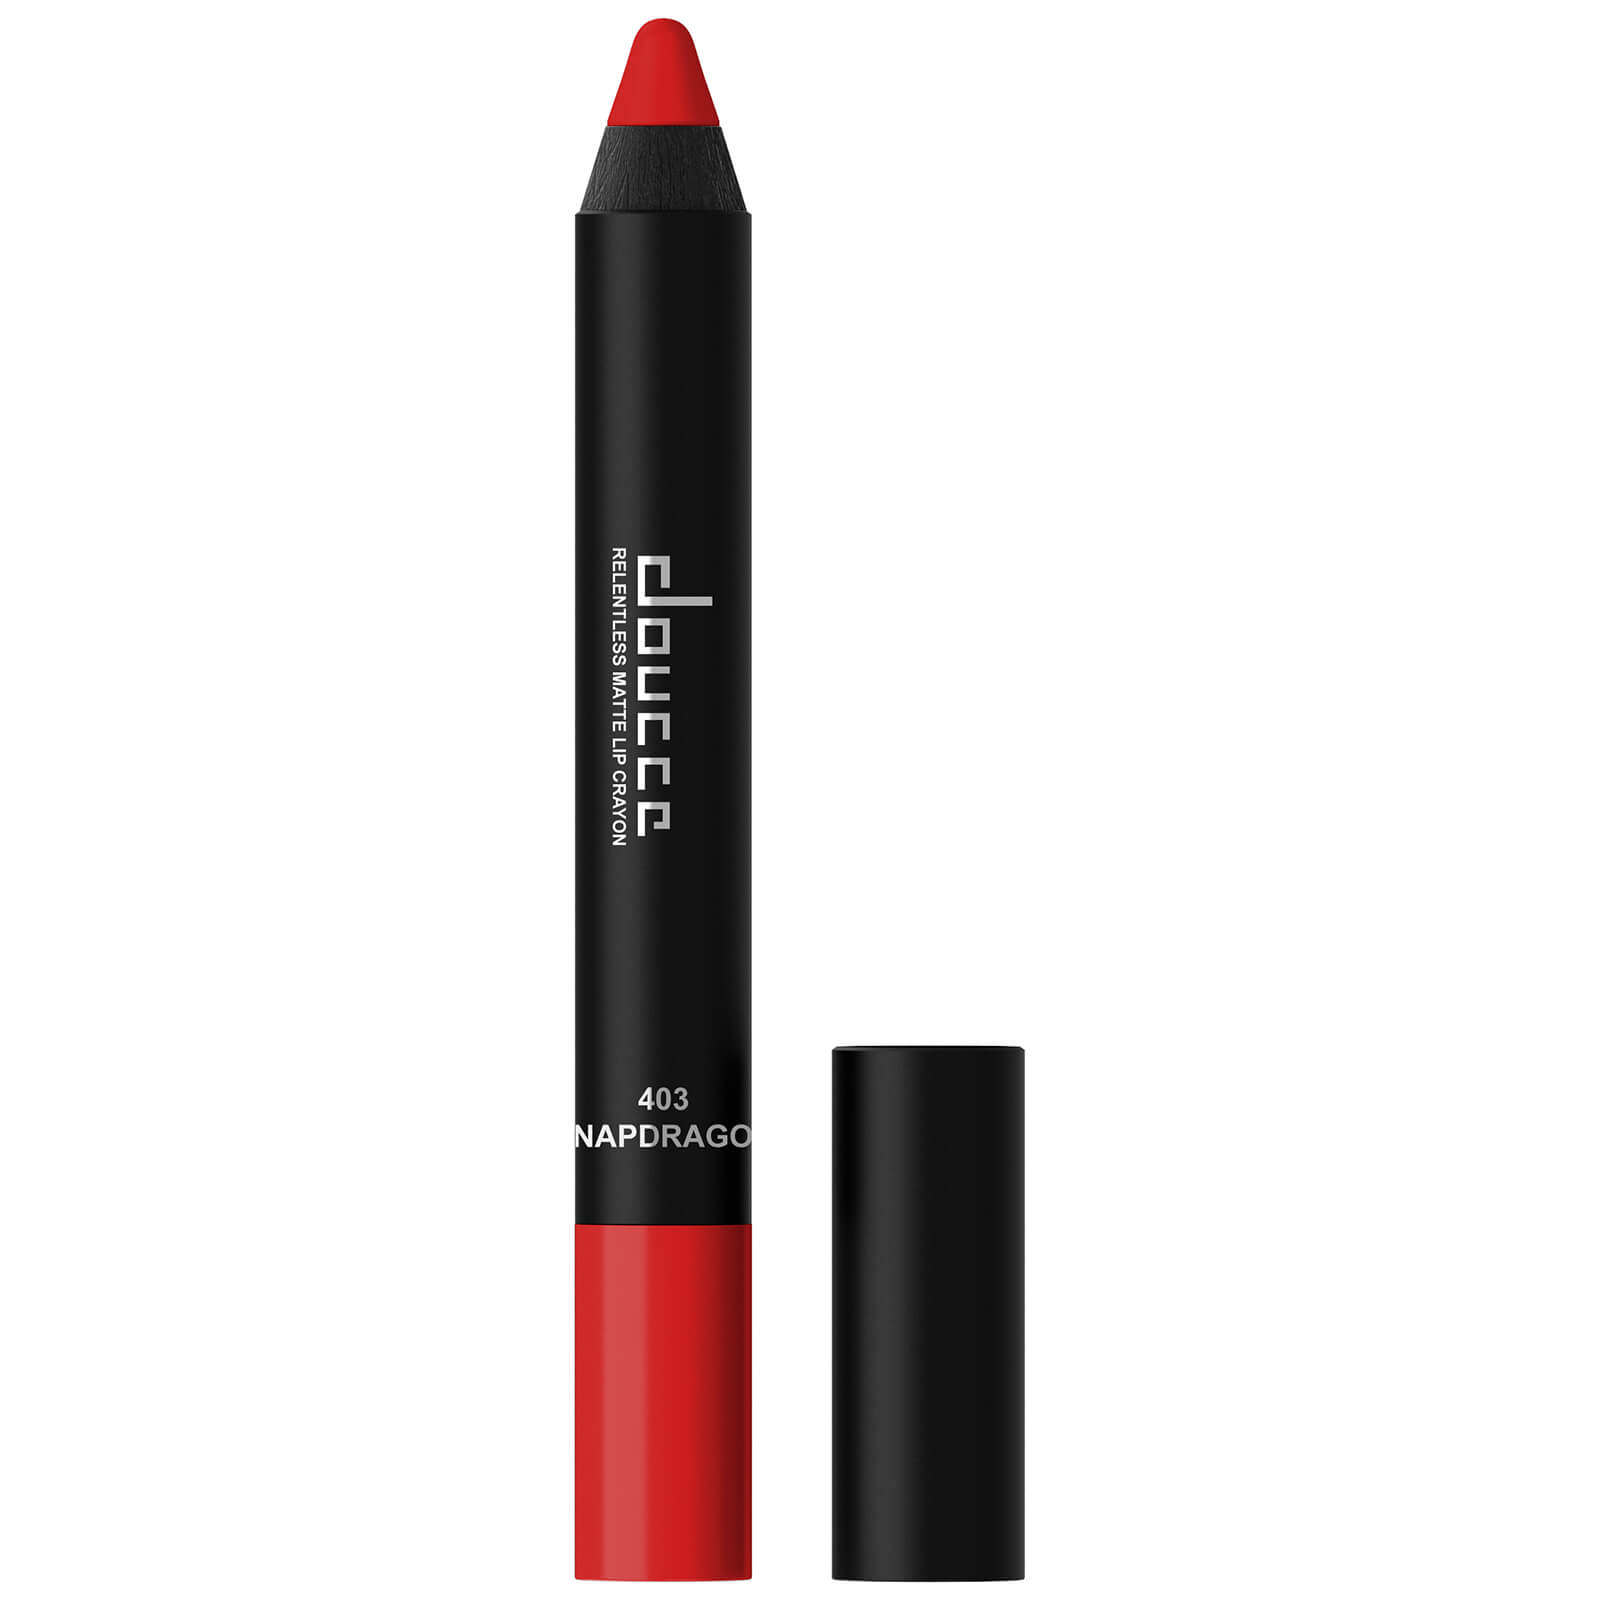 doucce Relentless Matte Lip Crayon 2.8g (Various Shades) - Snapdragon (403)